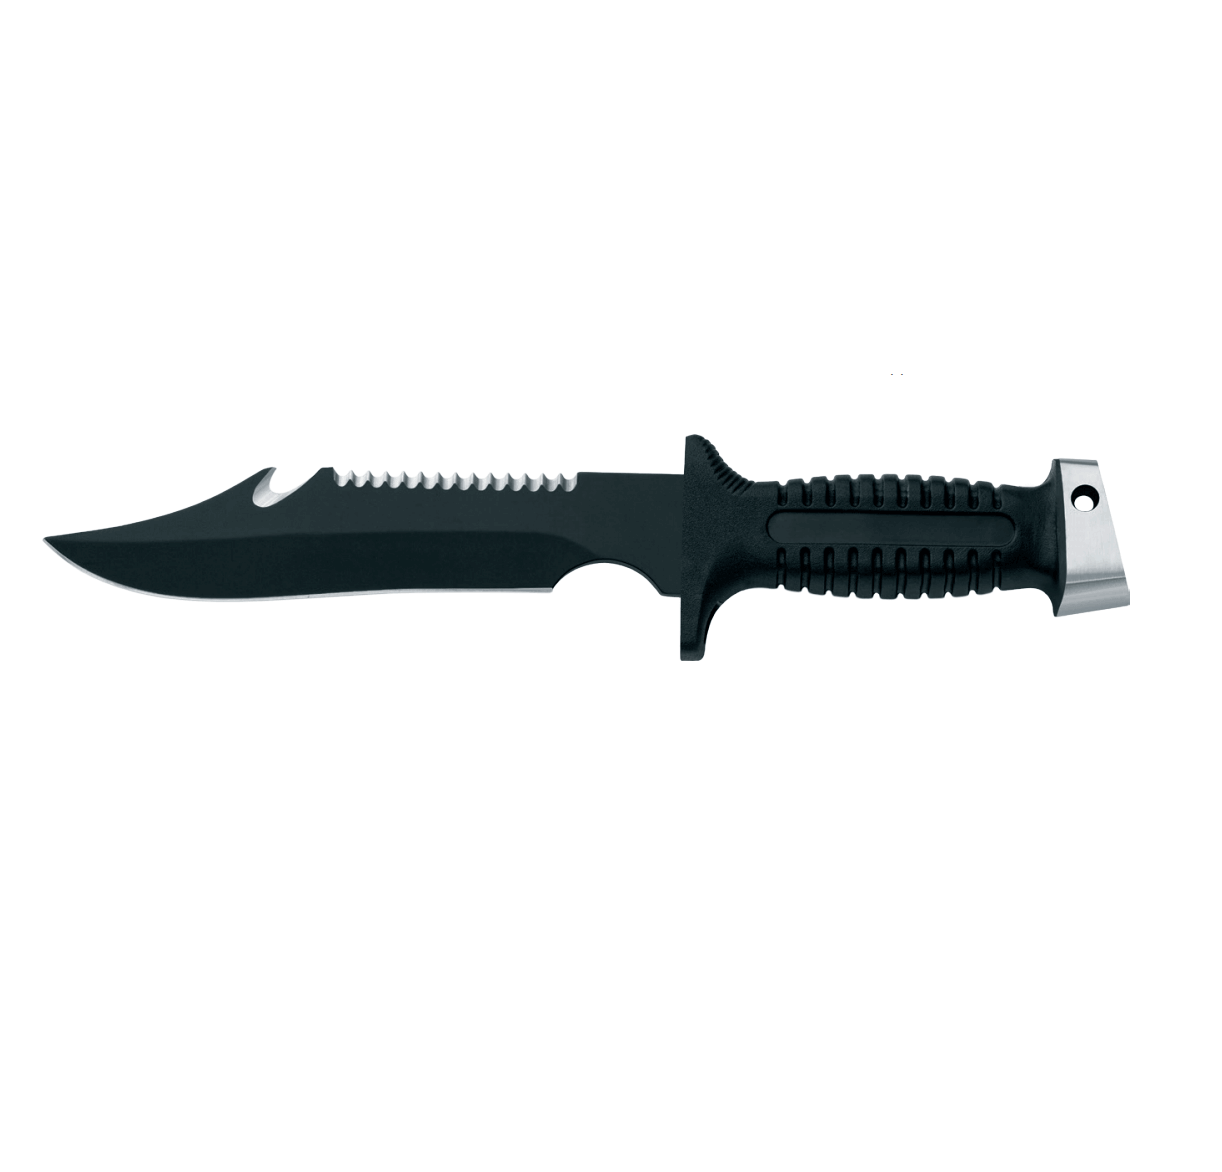 https://www.spearfishing.co.uk/wp-content/uploads/2020/05/Mac-Shark-M-2-Knife.png